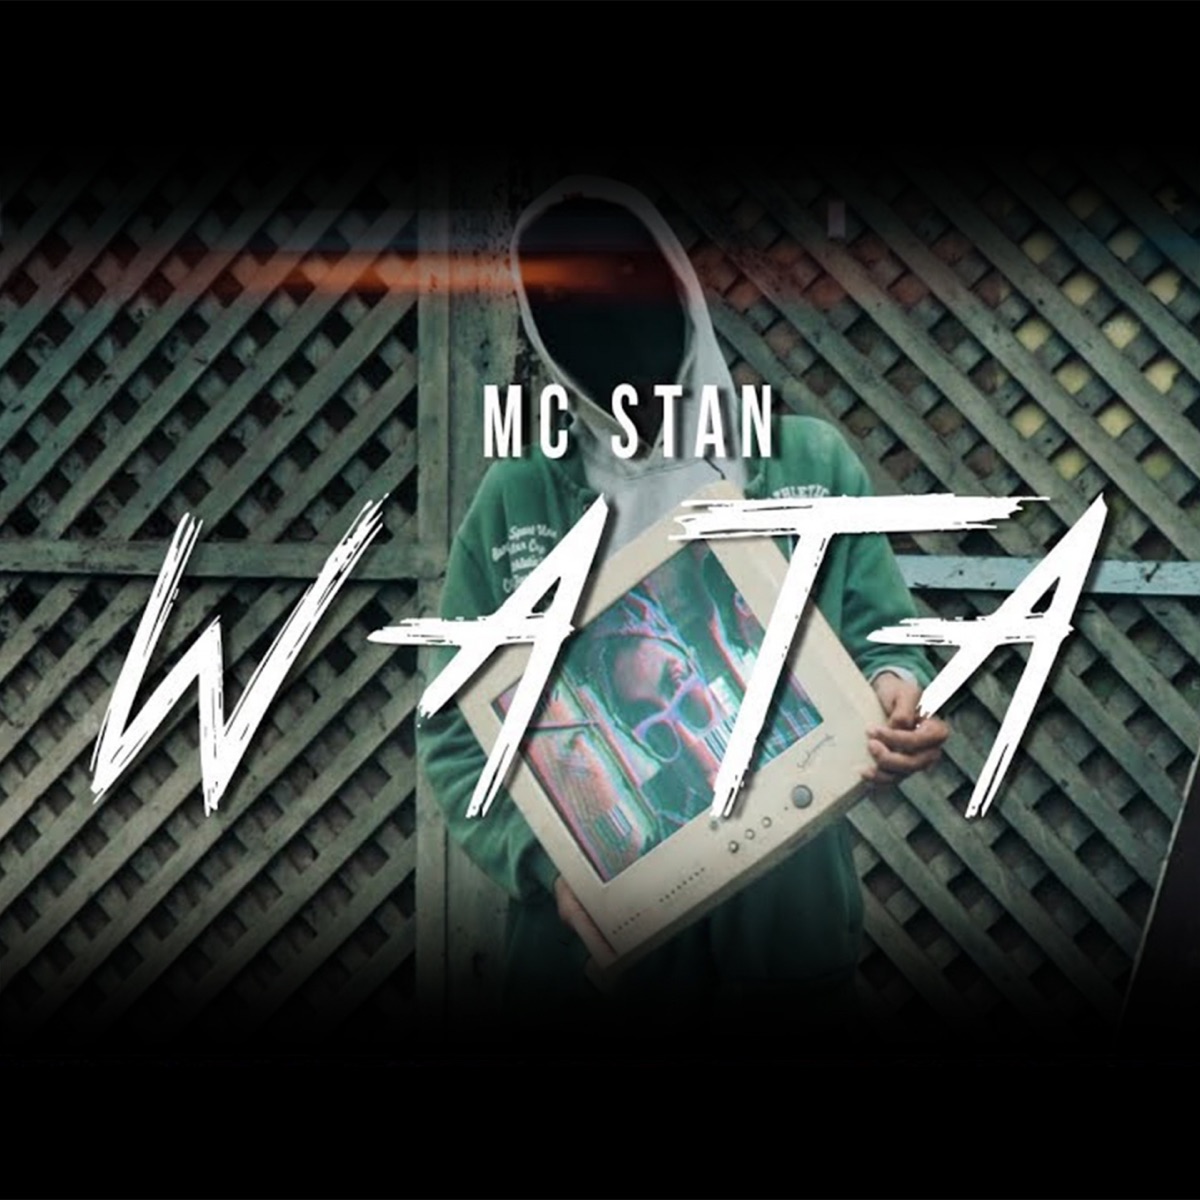 Shana Bann - Single - Album by MC Stan - Apple Music